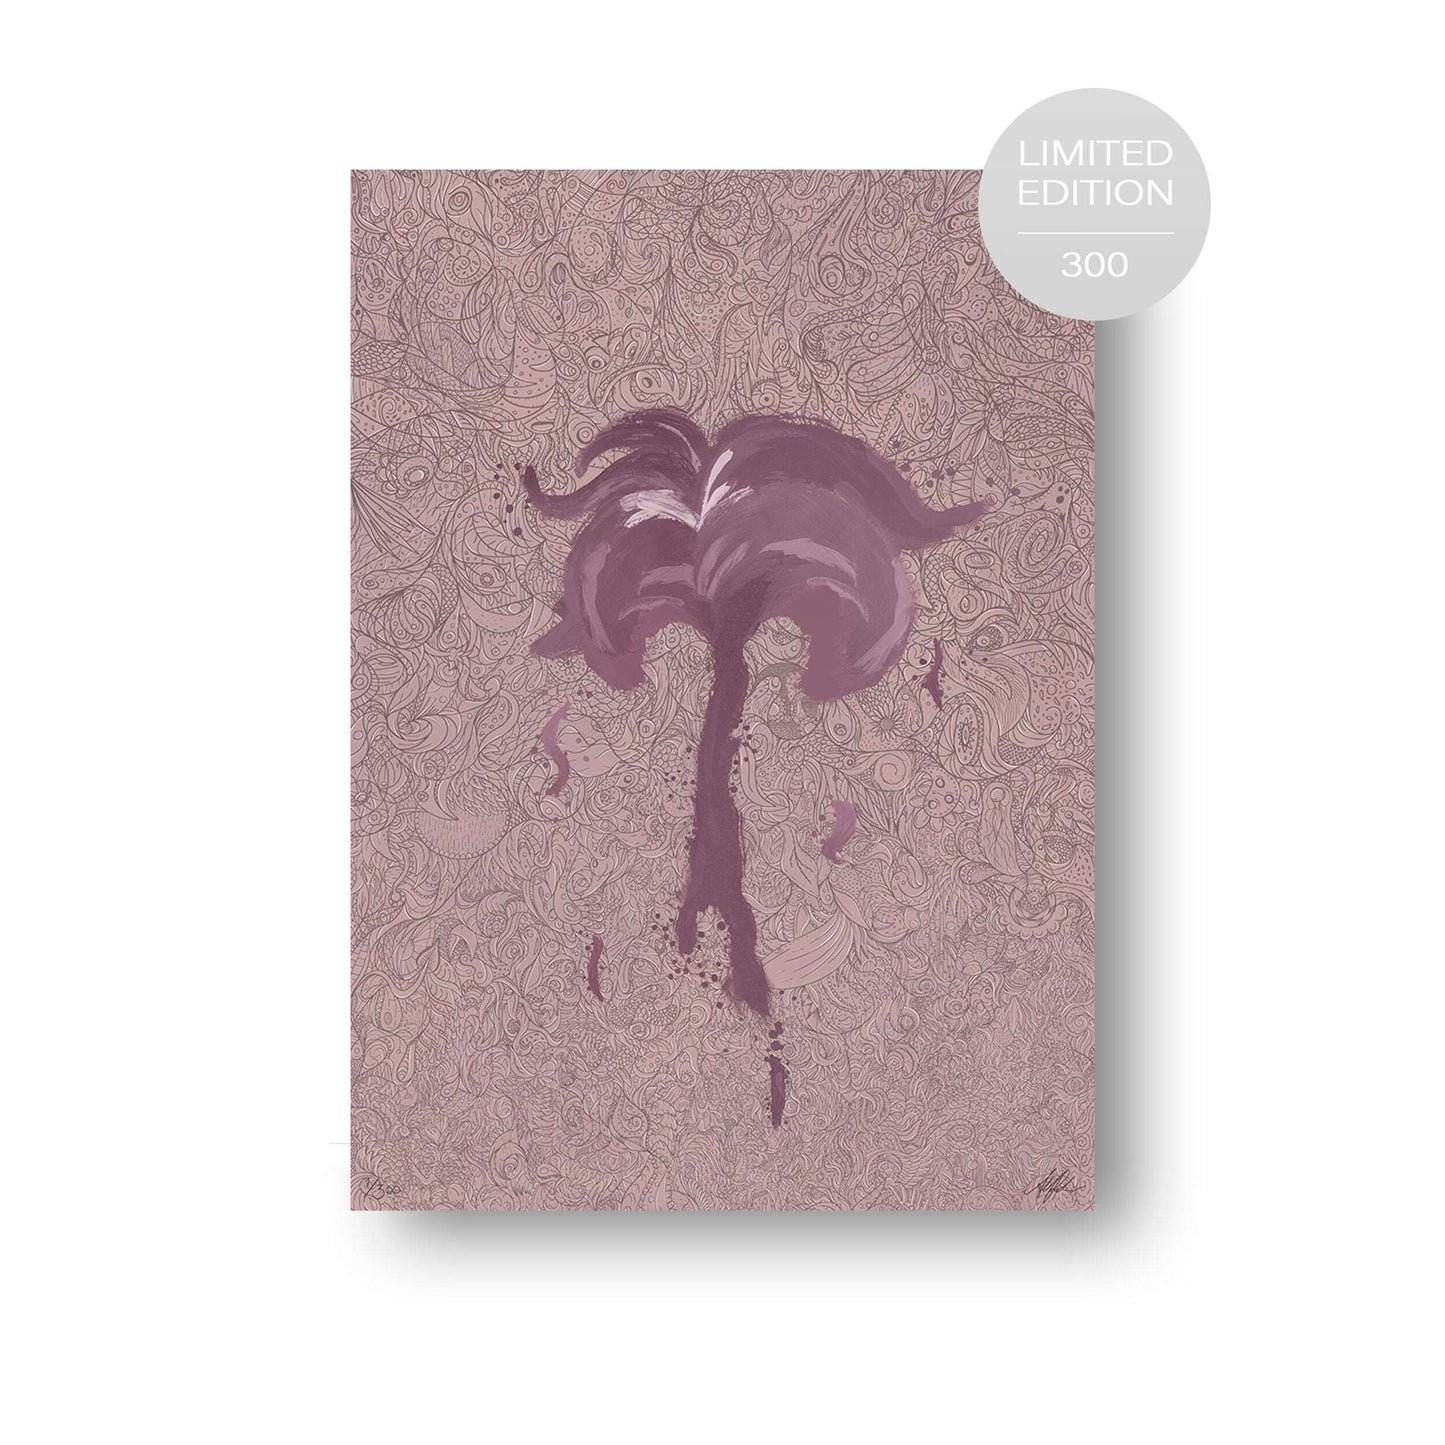 NOKUKO - Art - Alan Pedersen - ALANTHEROCK - Recognition - Listen to myself - limited edition 300 - purple reflection print